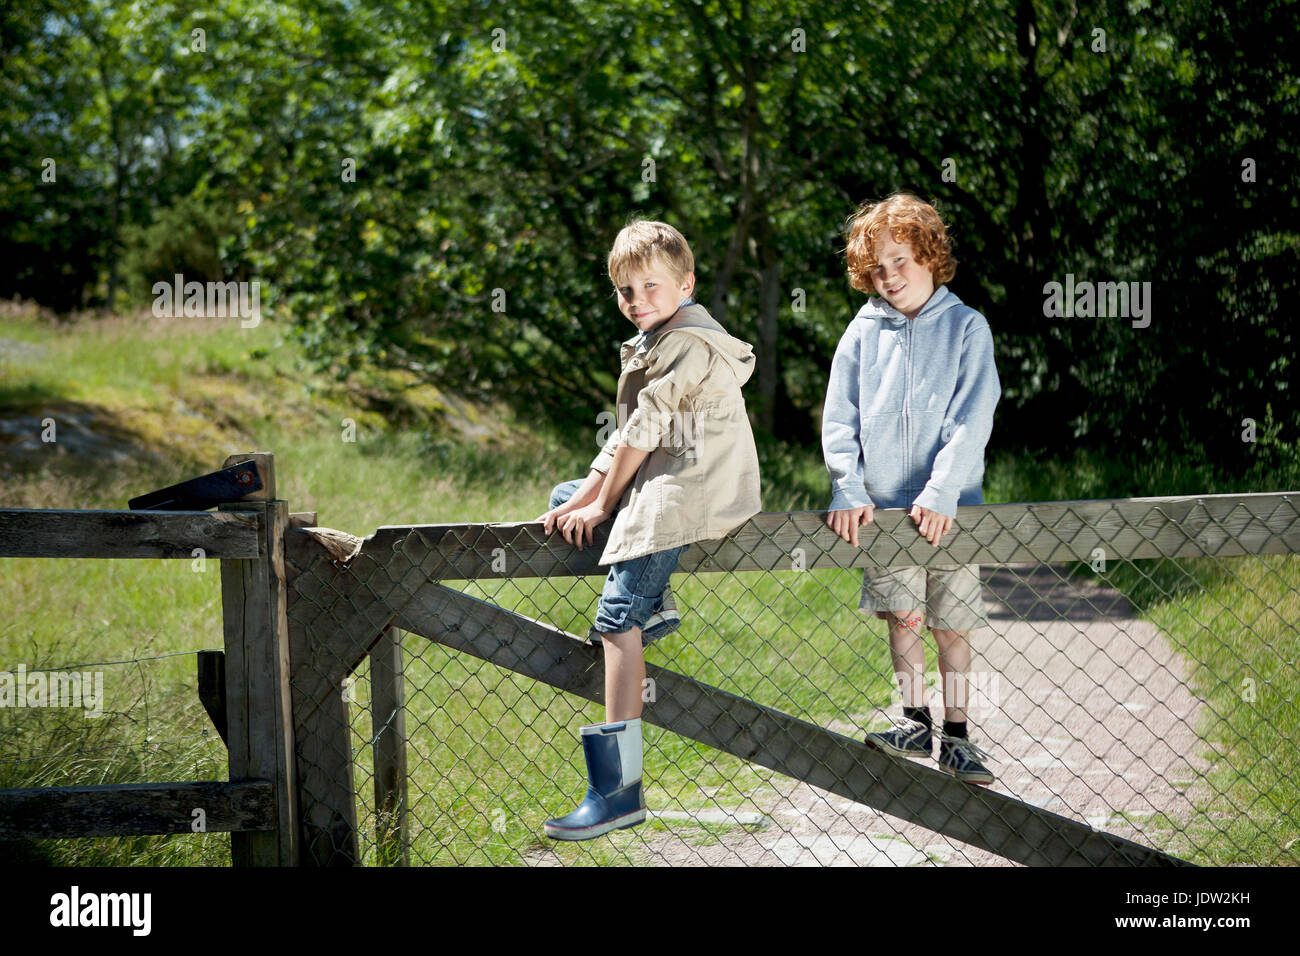 Children climbing wooden fence outdoors Stock Photo